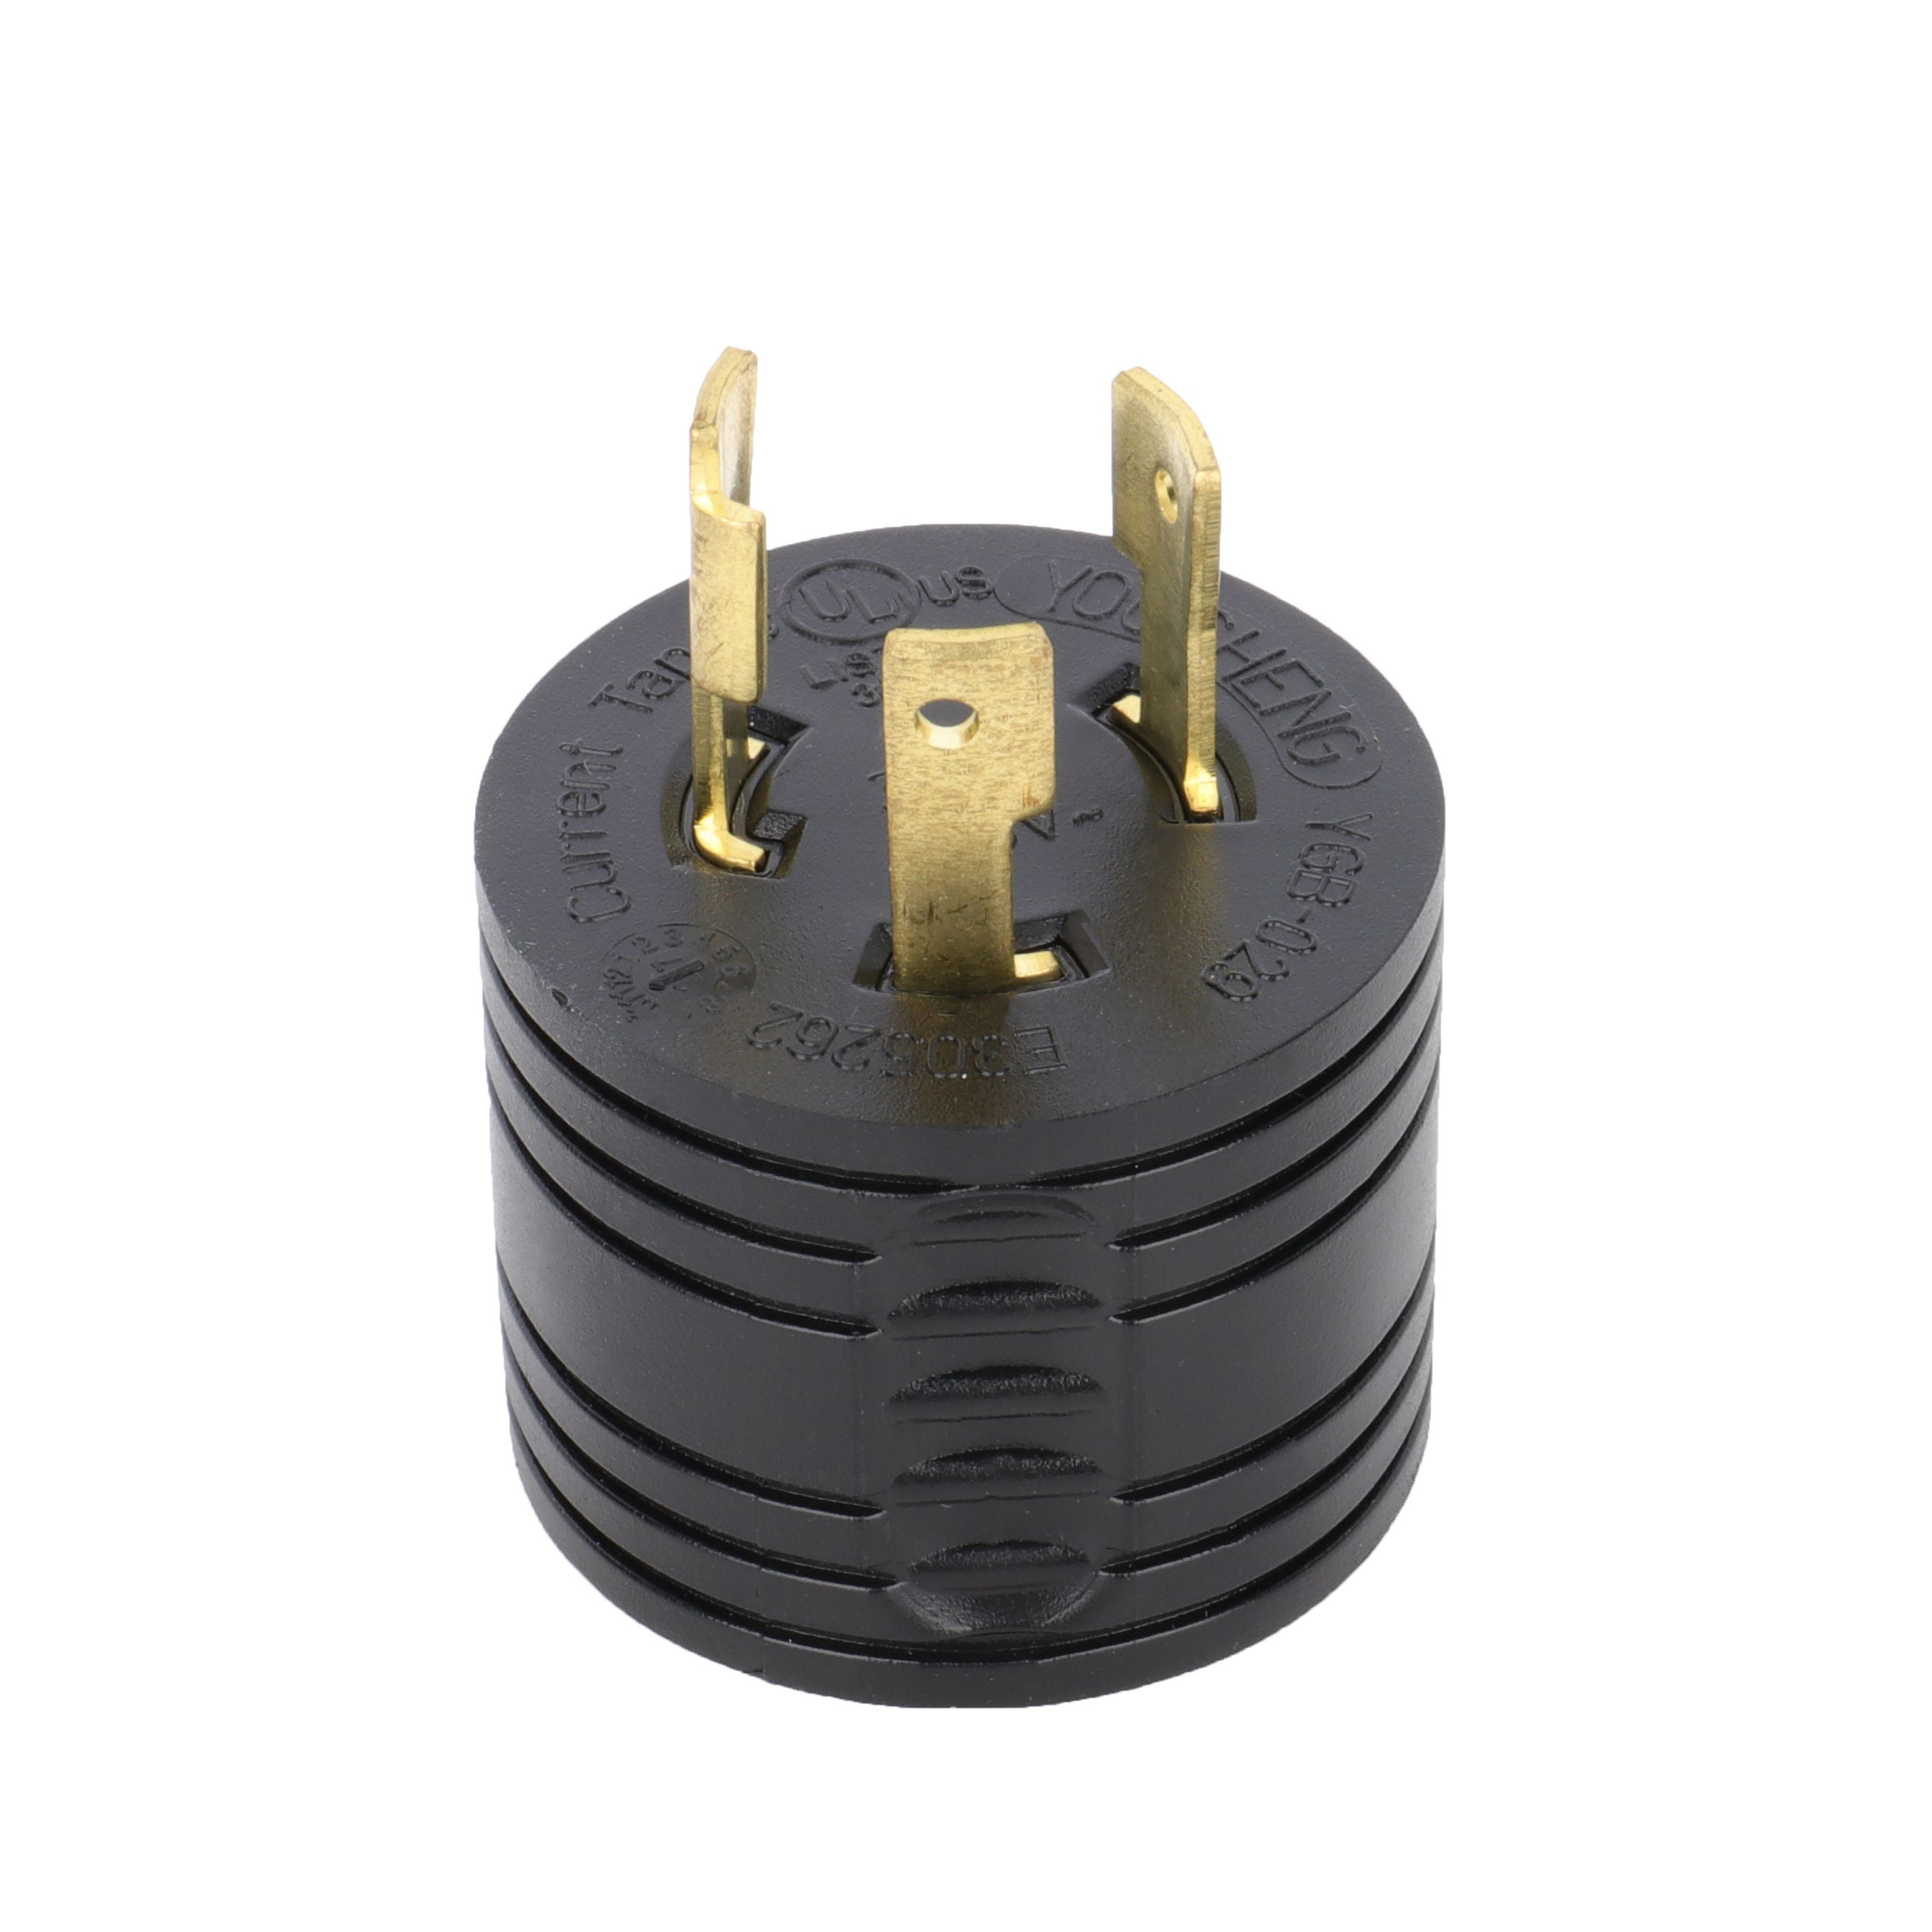 3 Prong Plug Adapter Australia AS3112 receptacle to USA NEMA 5-15P SF Cable 